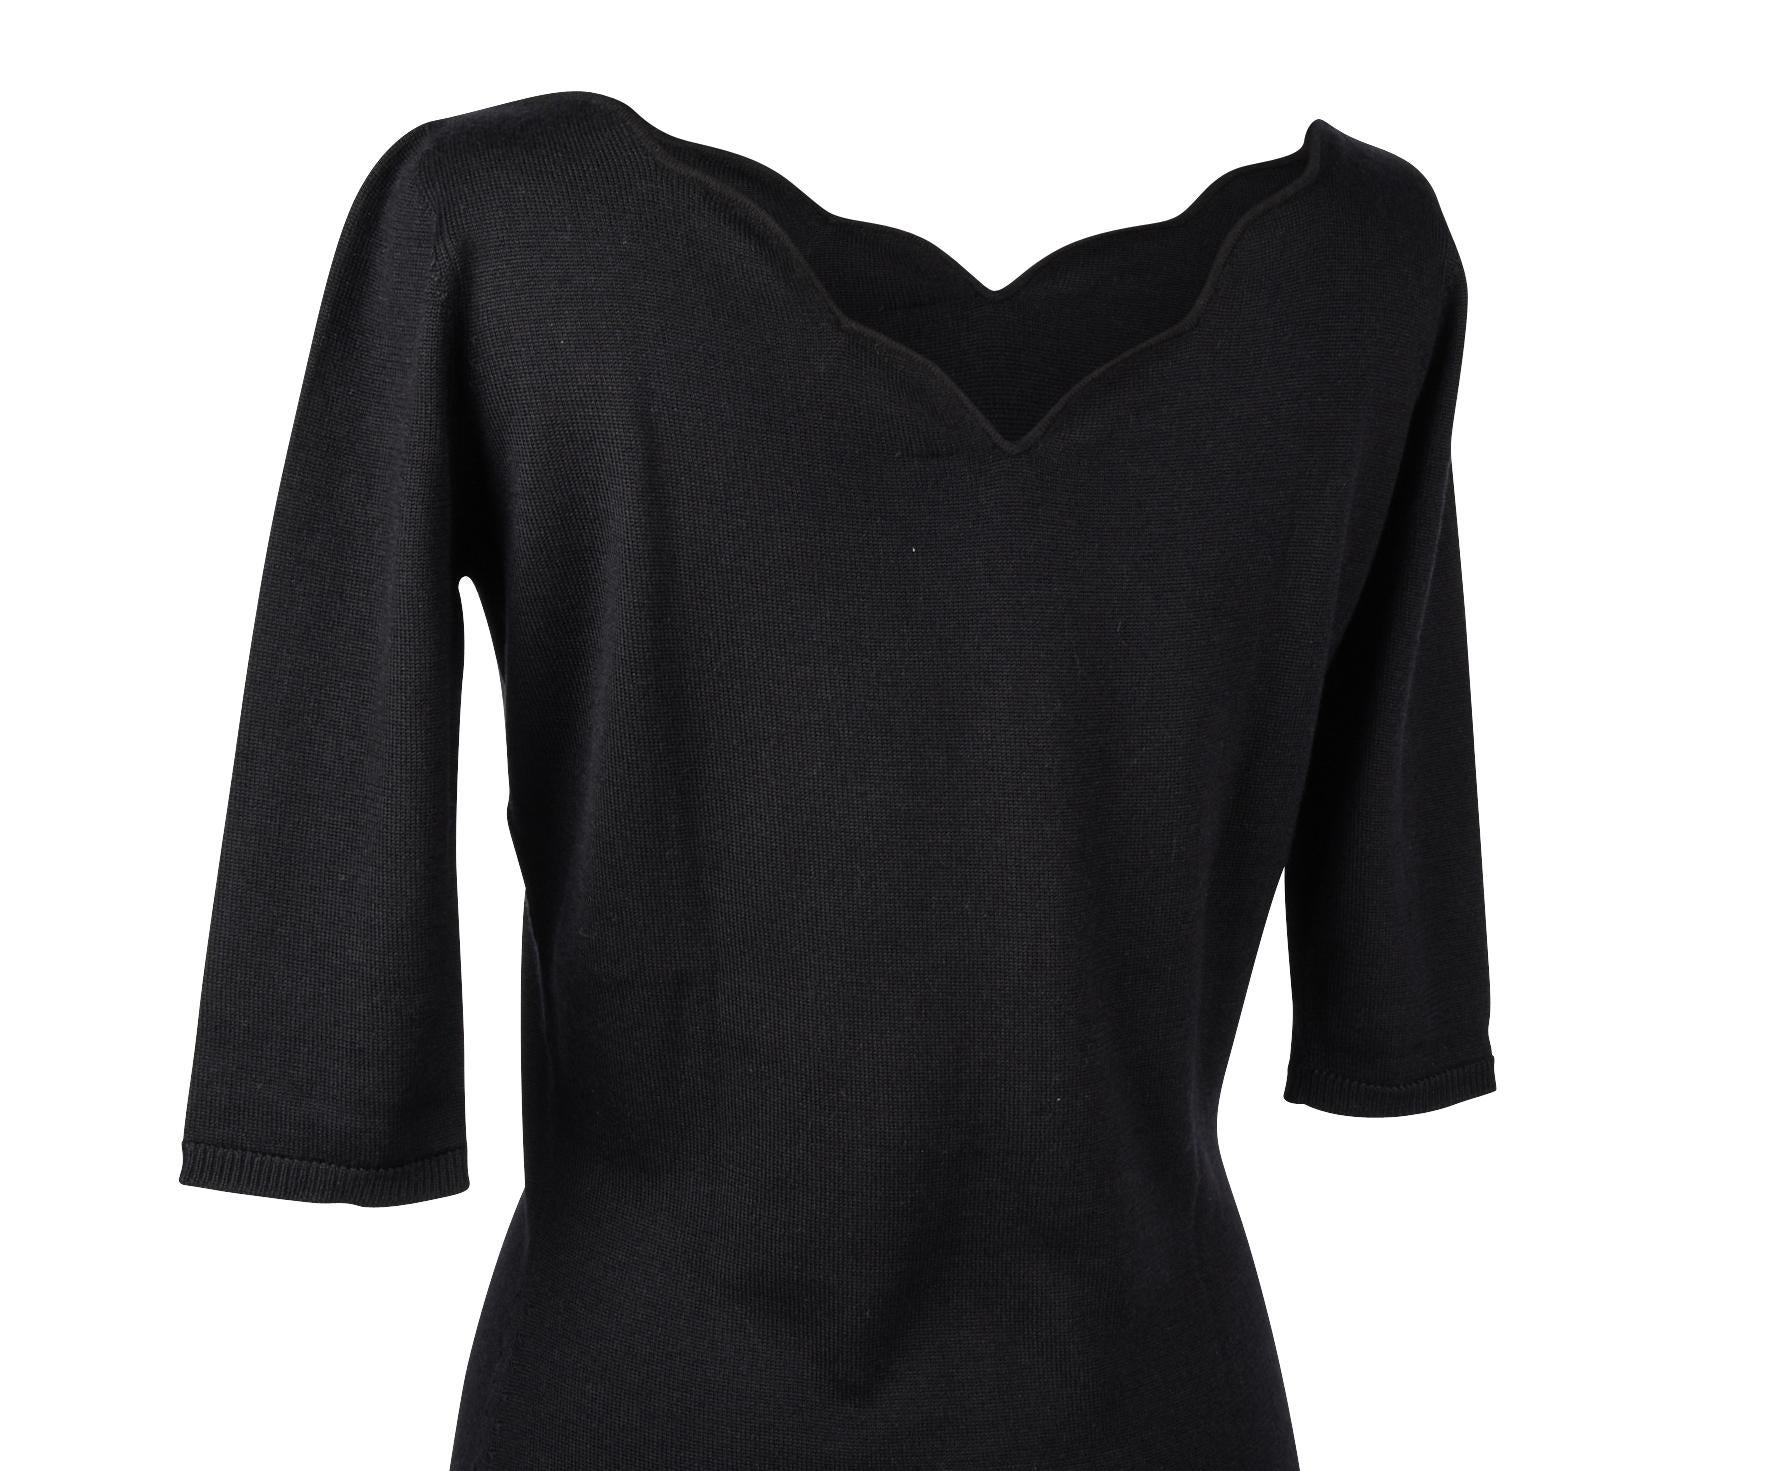 Women's Christian Dior Top Black Cashmere Pullover Scallop Neckline 3/4 Sleeve